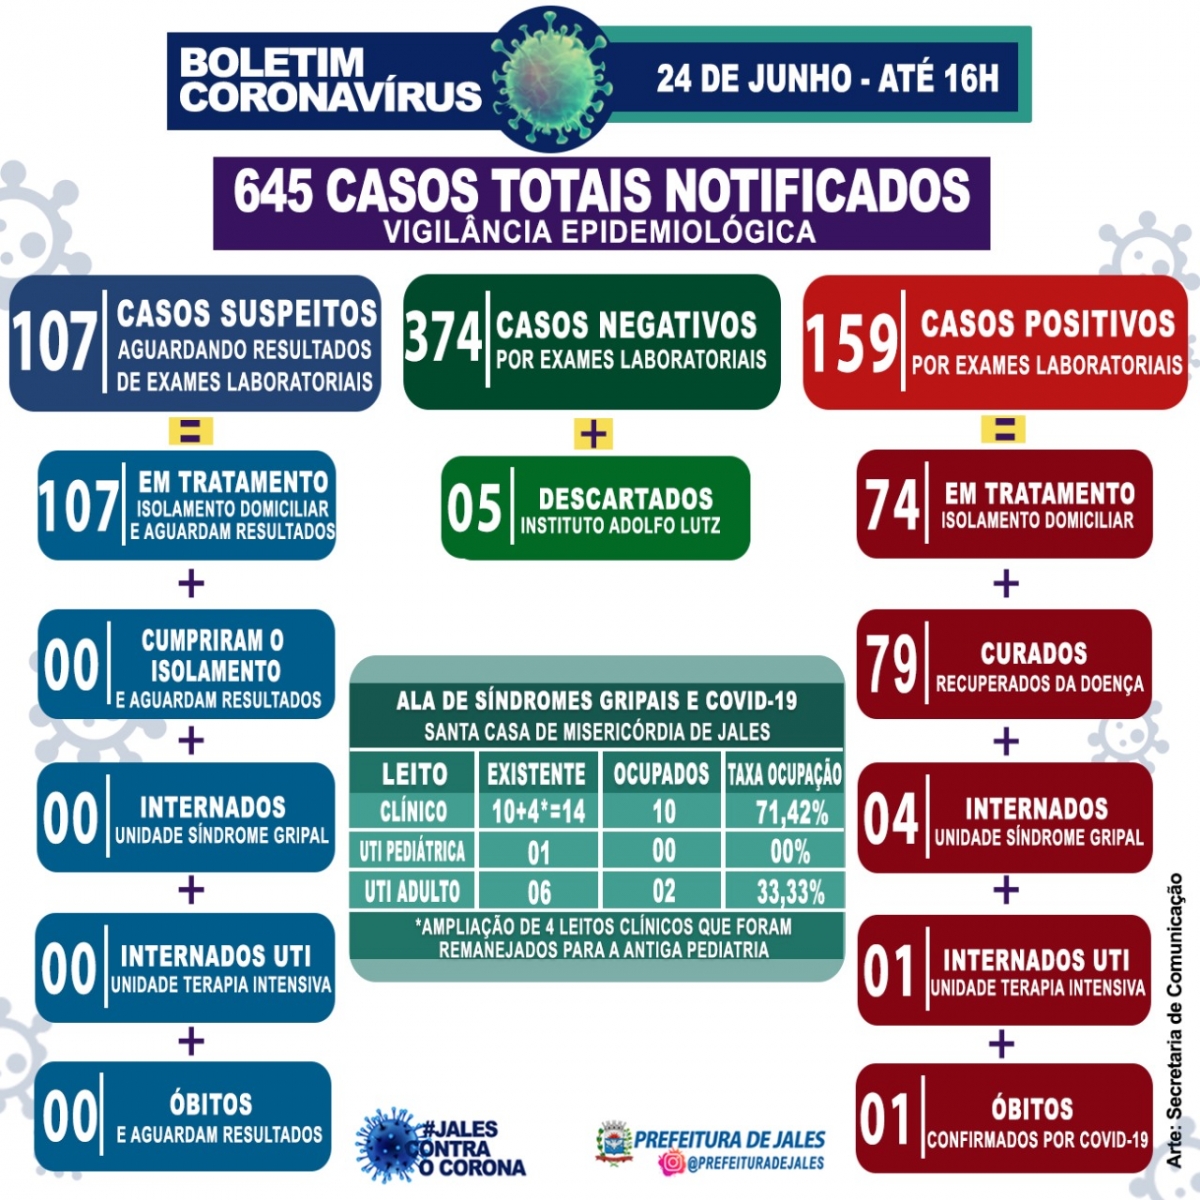 Jales - 36 novas notificações de casos suspeitos no município de Jales para a Covid-19 (Coronavírus) nas últimas 24 horas. 